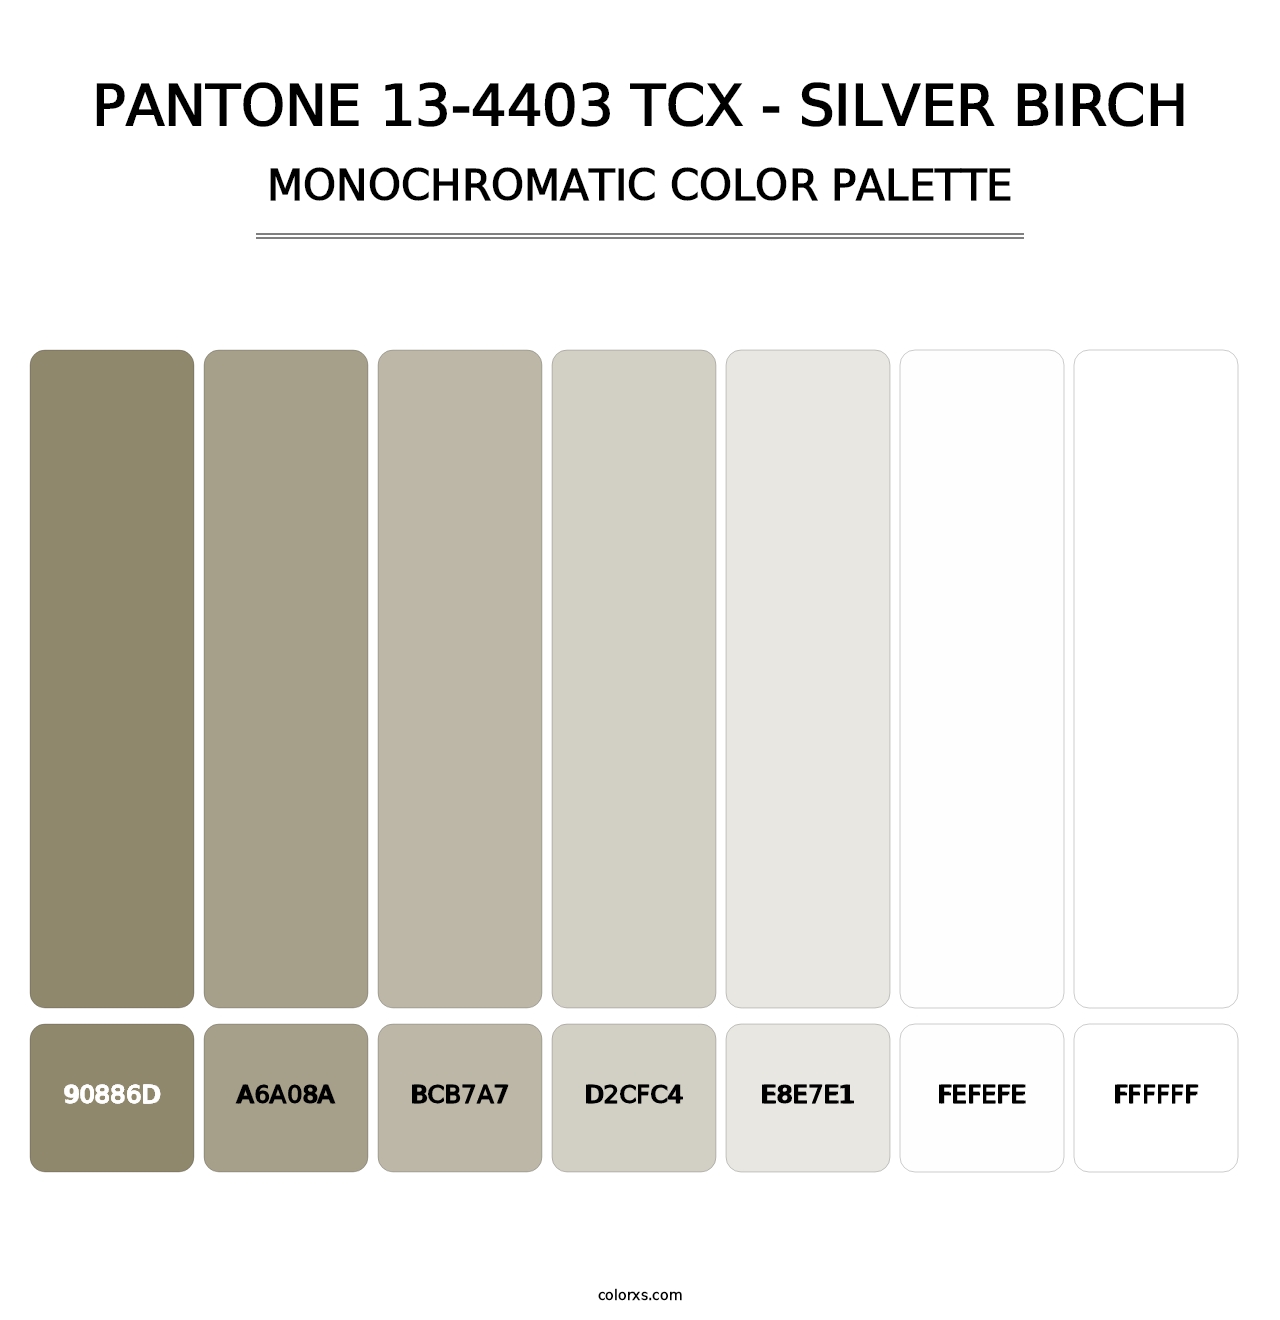 PANTONE 13-4403 TCX - Silver Birch - Monochromatic Color Palette